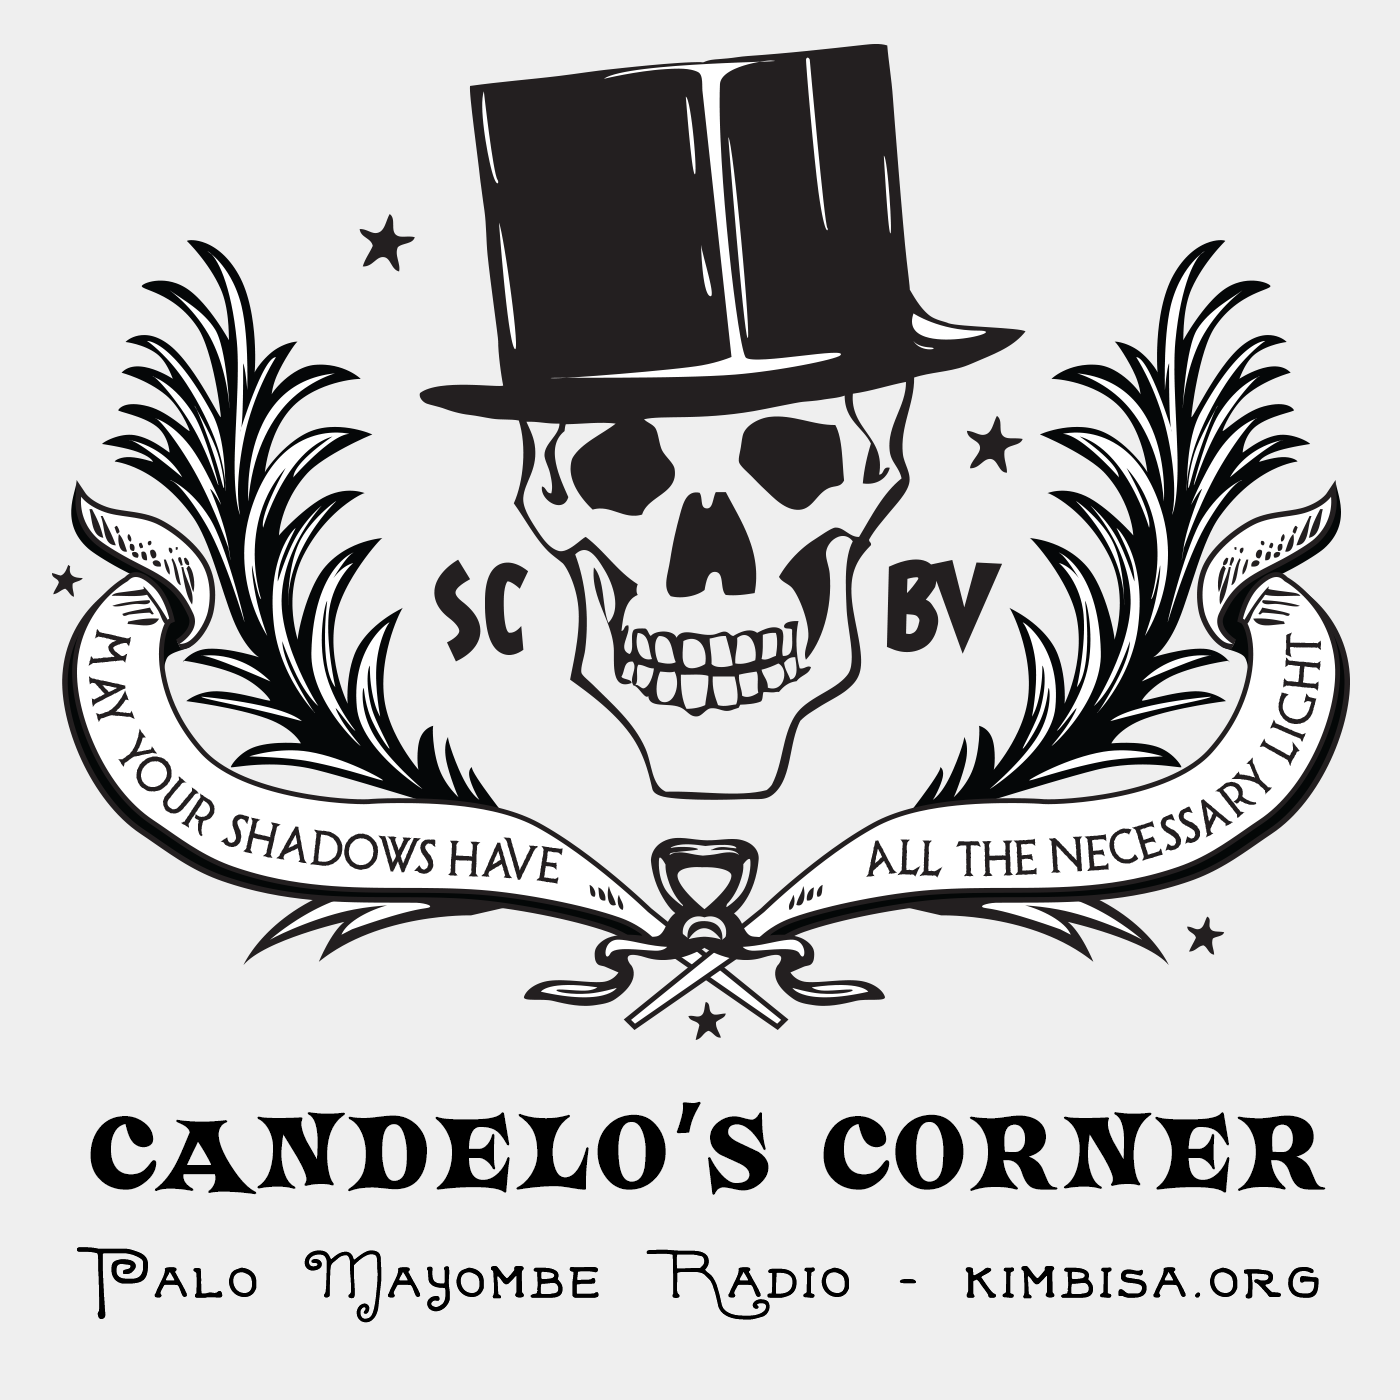 | Kimbisa.org | Home of Candelo's Corner Palo Mayombe Talk Show